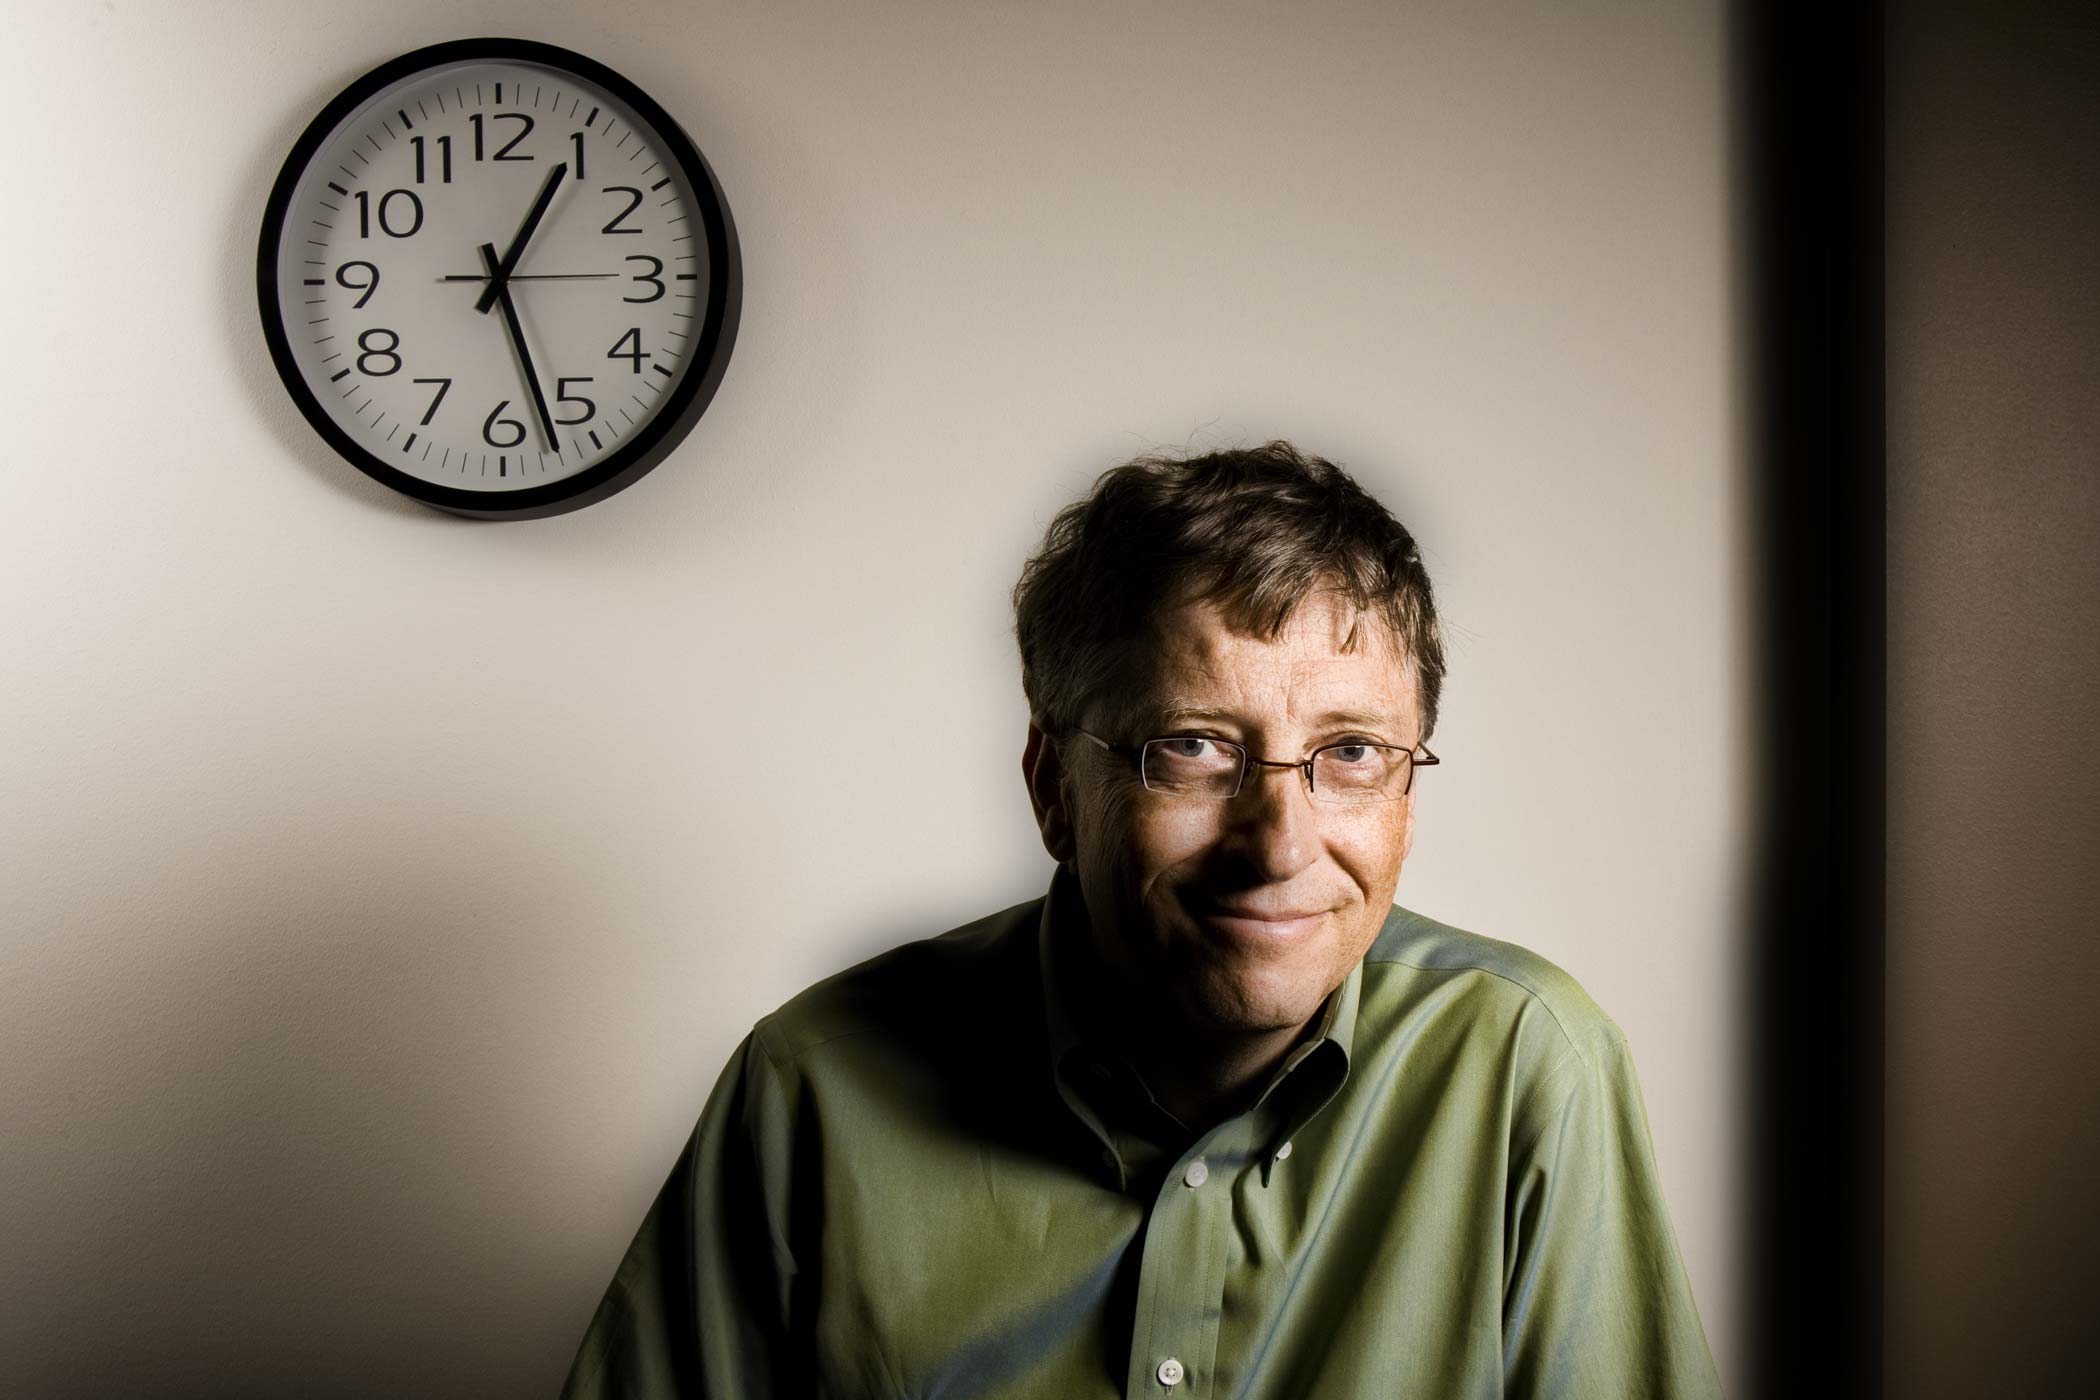 Bill Gates - Microsoft